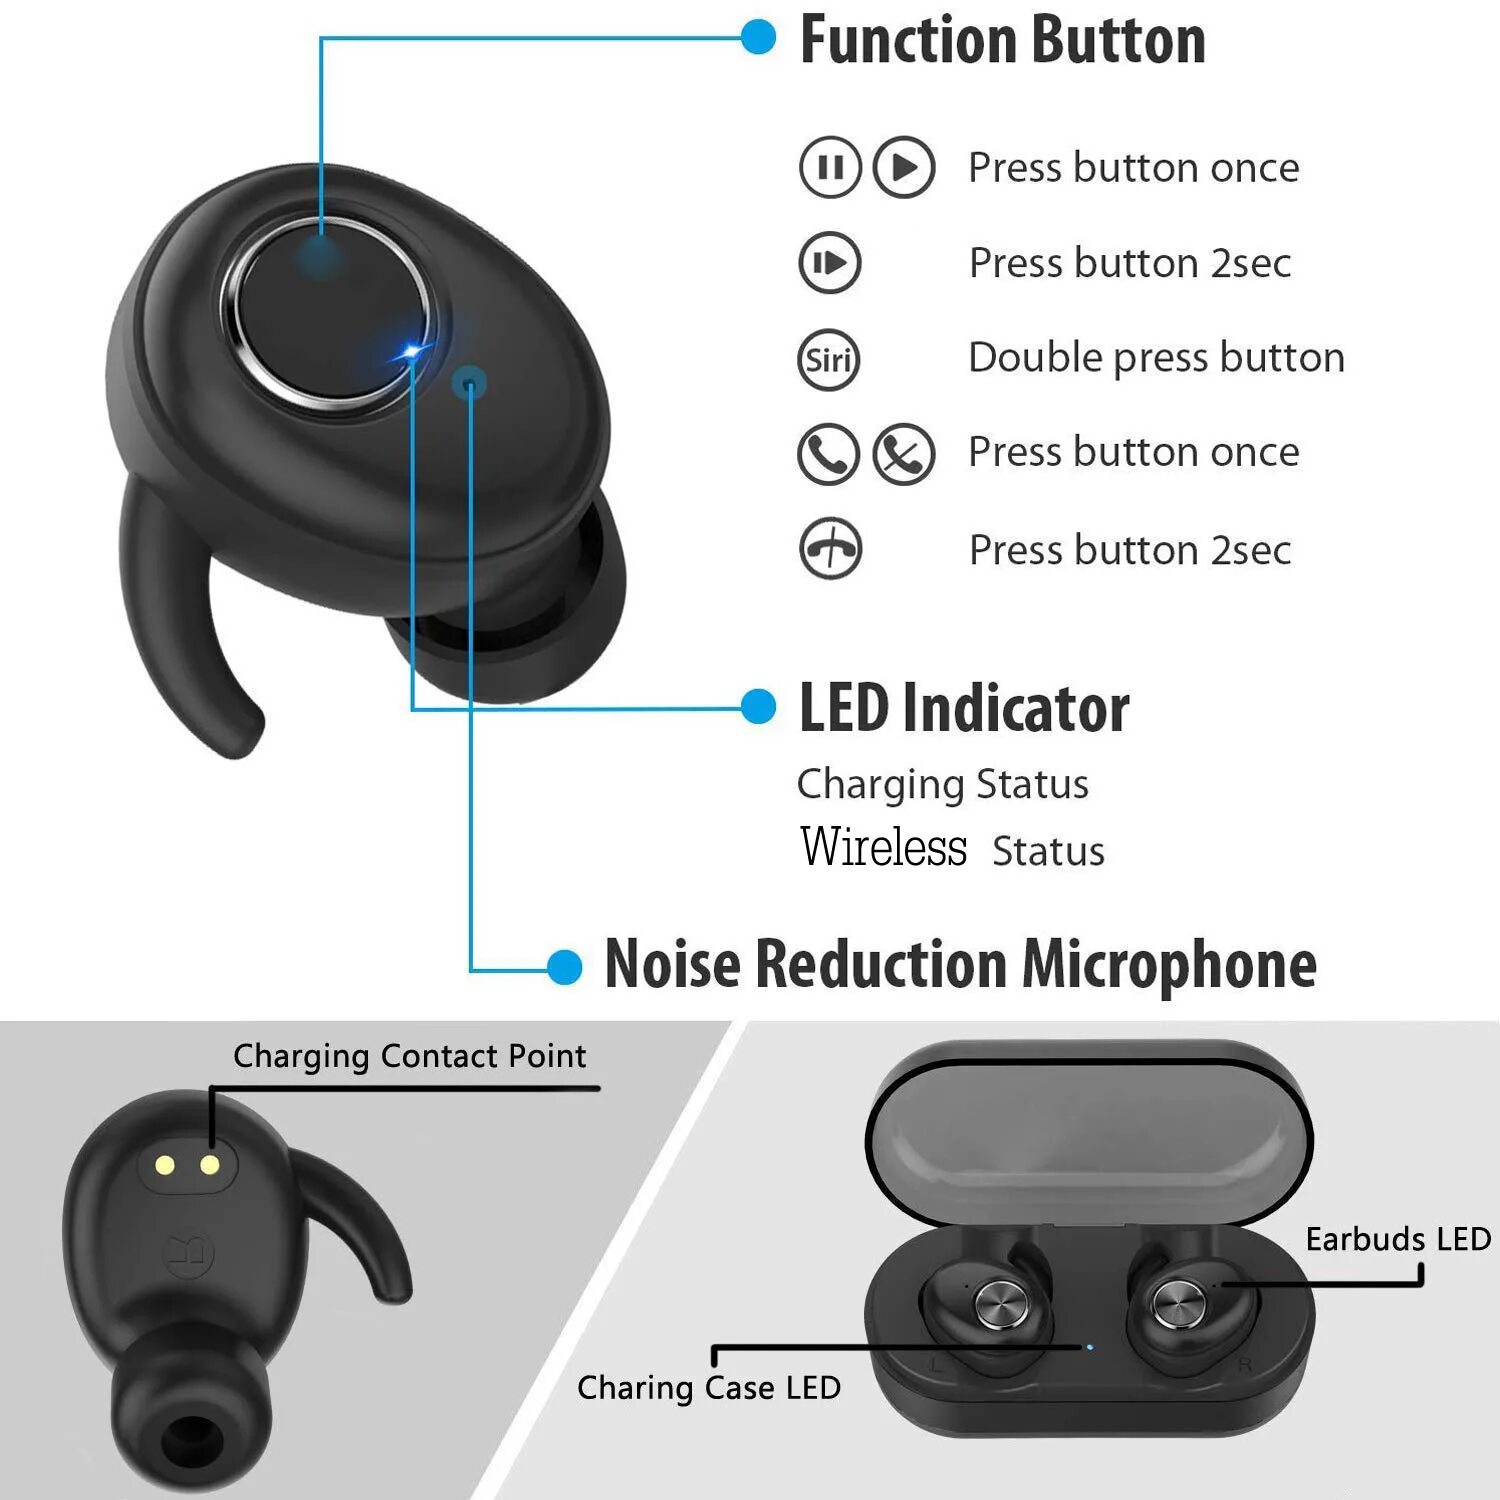 Беспроводная гарнитура Wireless Headset BB. Wireless Bluetooth Headset наушники 5v 100ma. Беспроводные наушники JBL Wireless Earbuds Charing Box. Наушники Wireless Earbuds Charging Box.